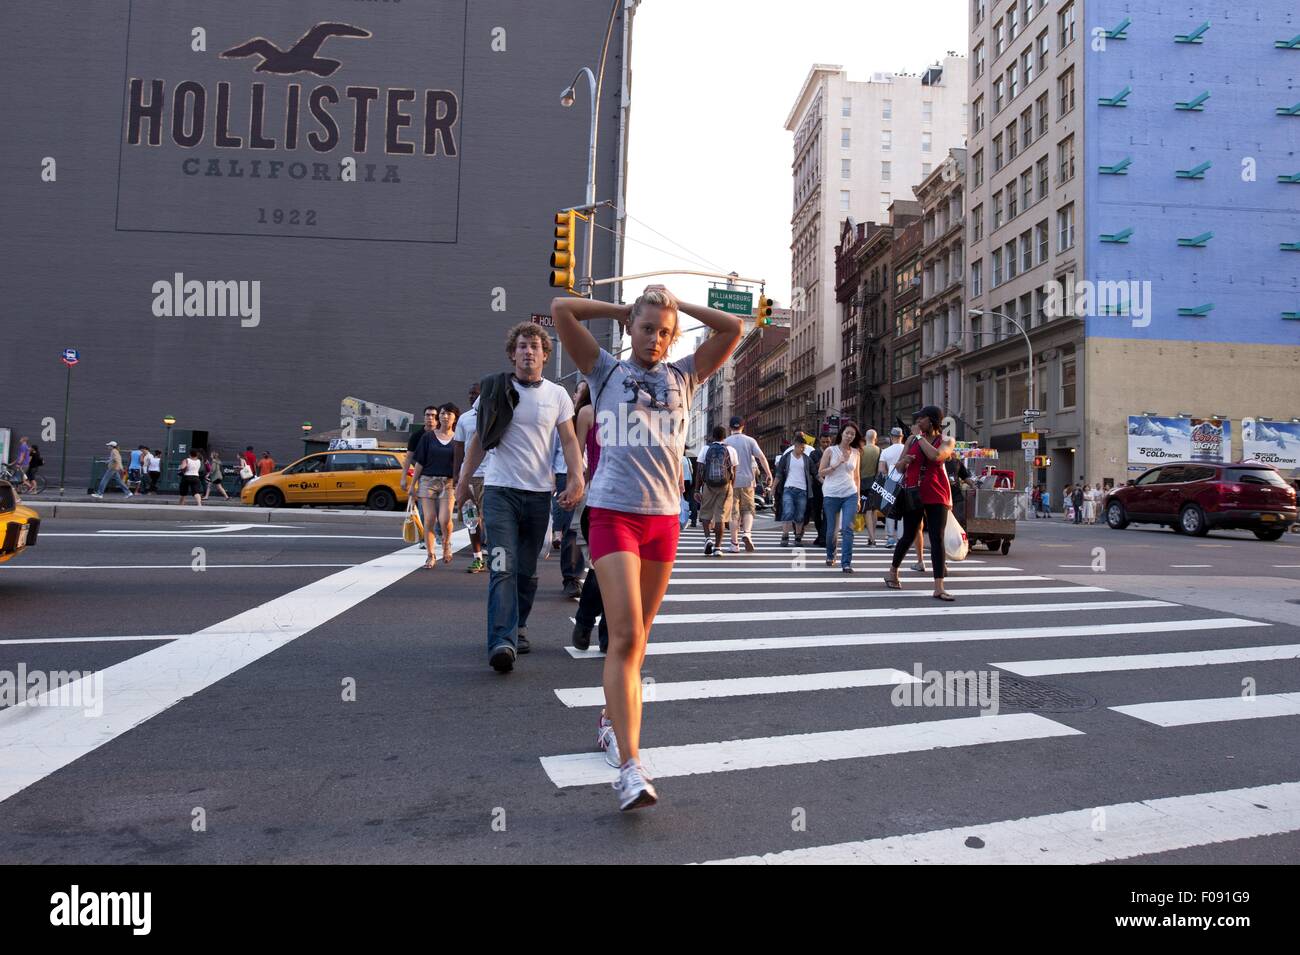 Hollister models posing at SoHo in New York, USA Stock Photo